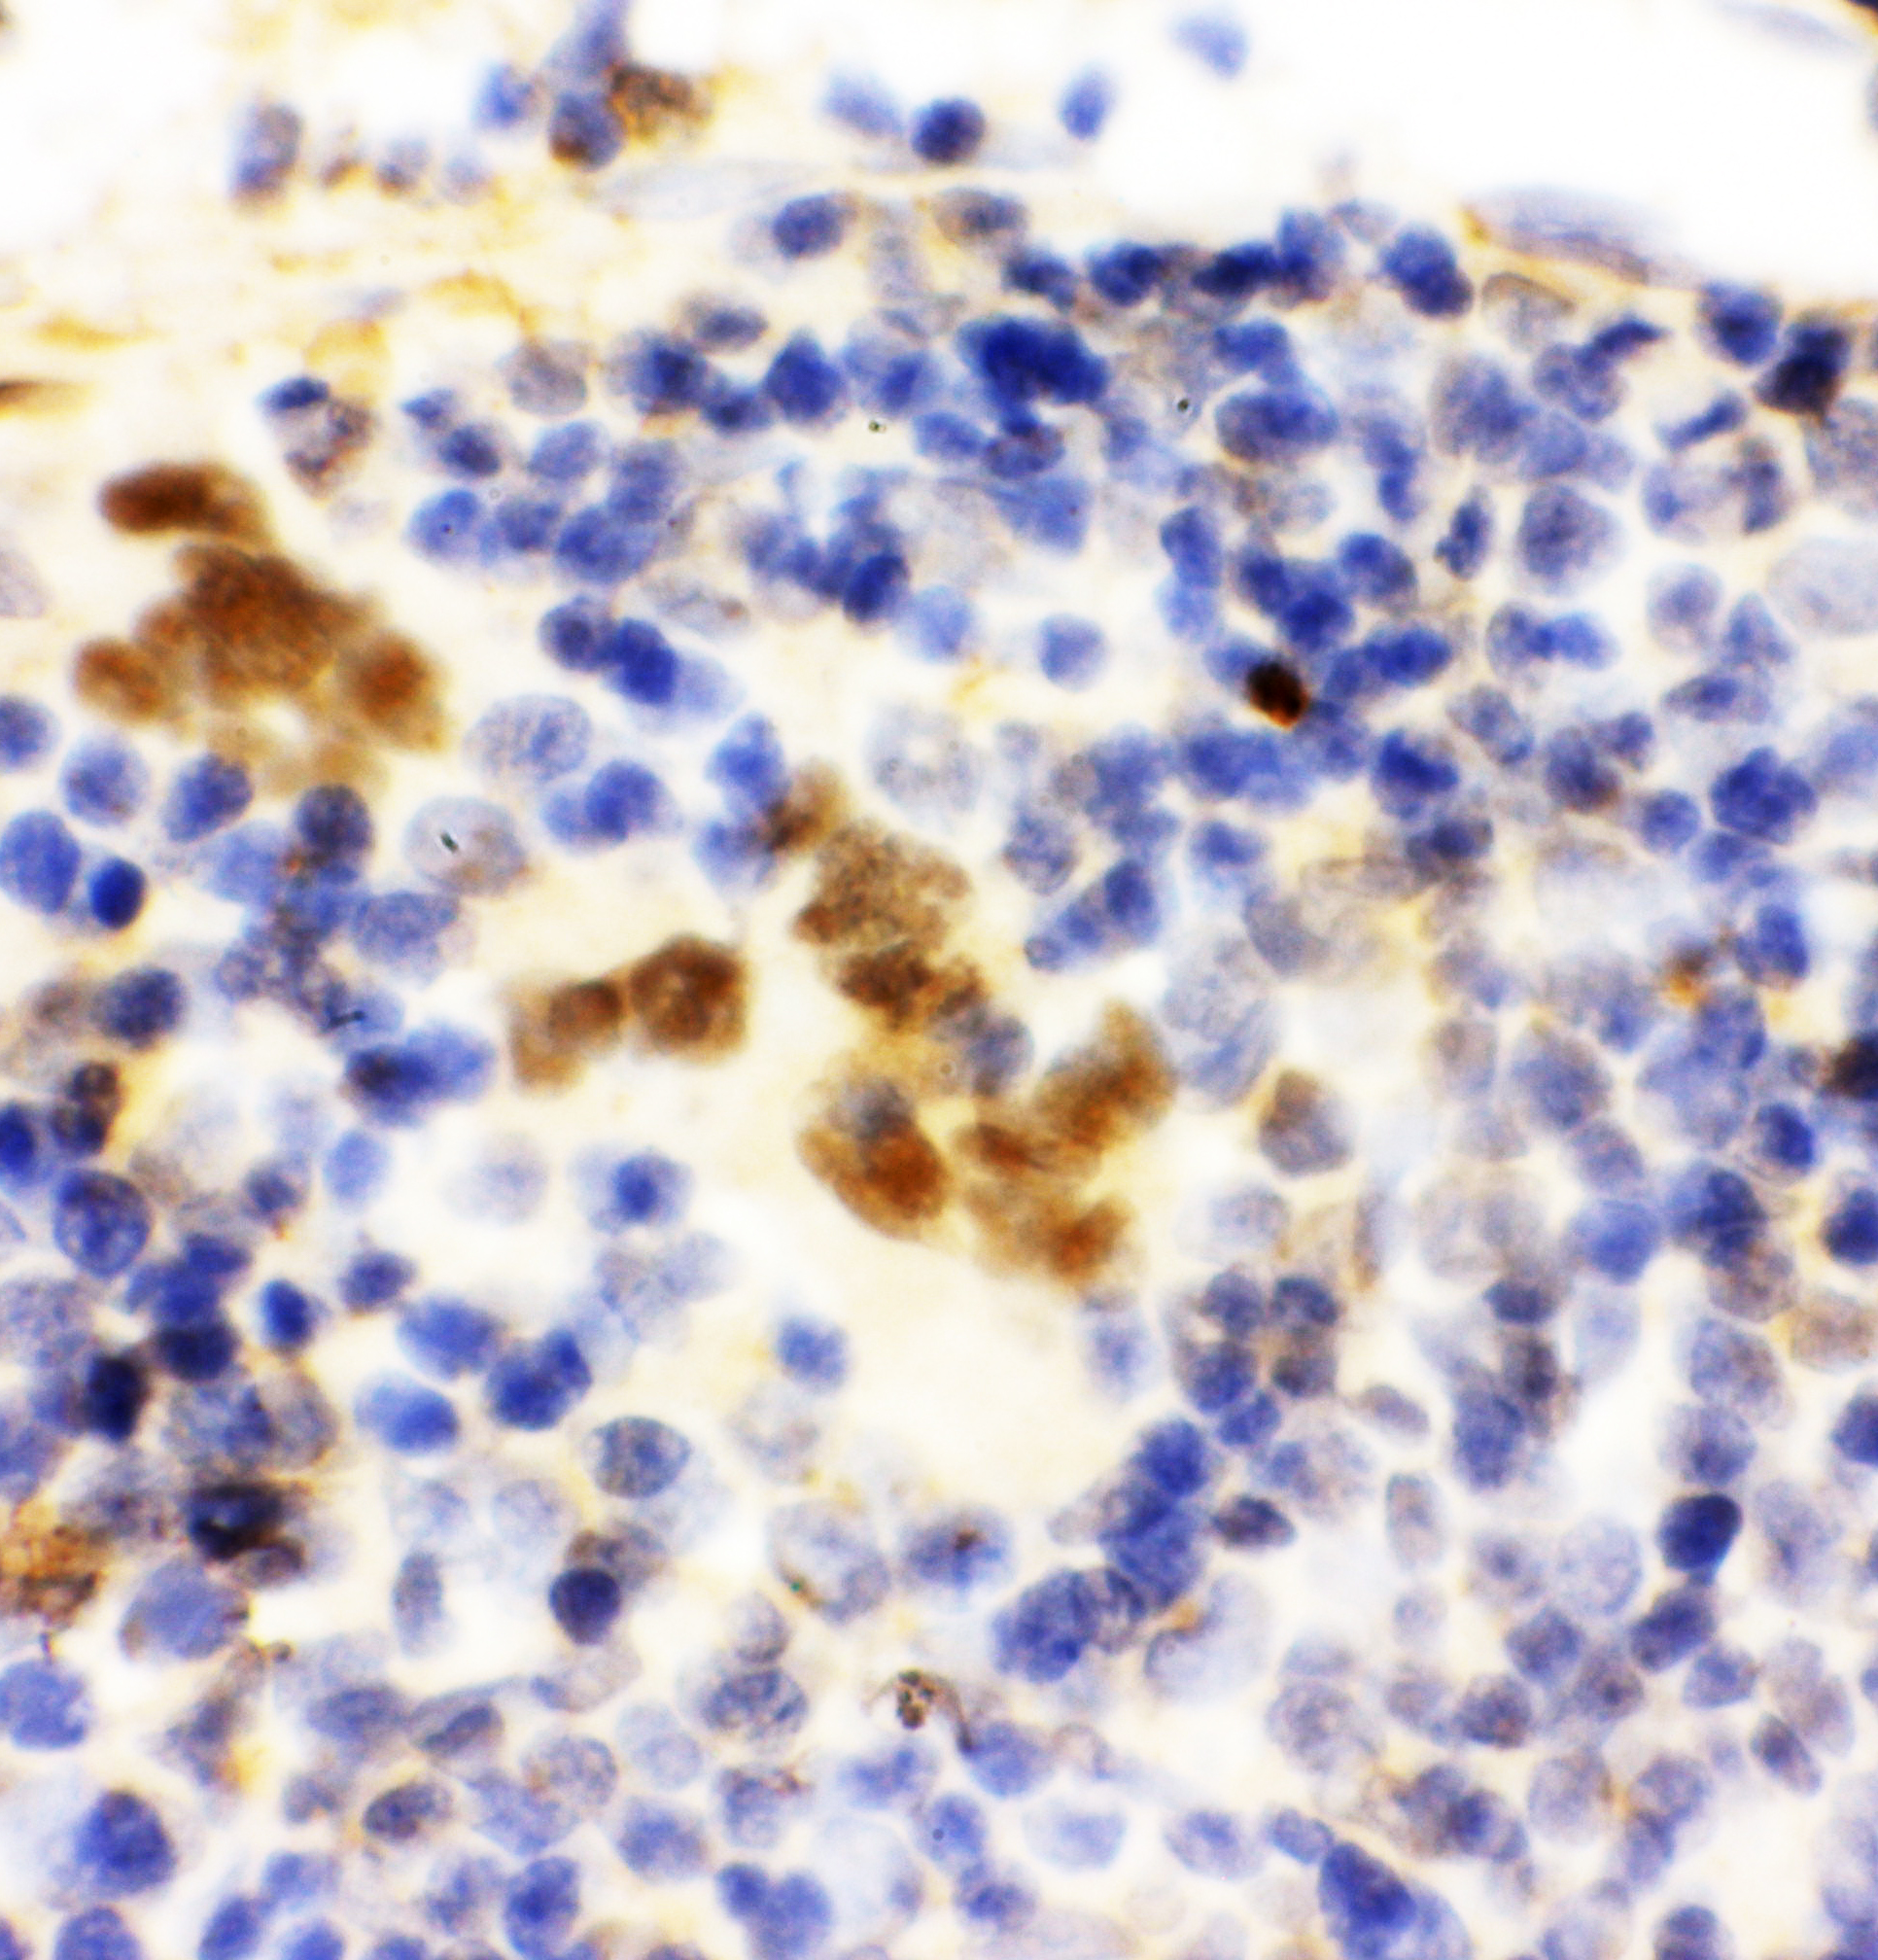 FLI1 Antibody - N-terminal region (OABB01342) in Rat Spleen Tissue using Immunohistochemistry